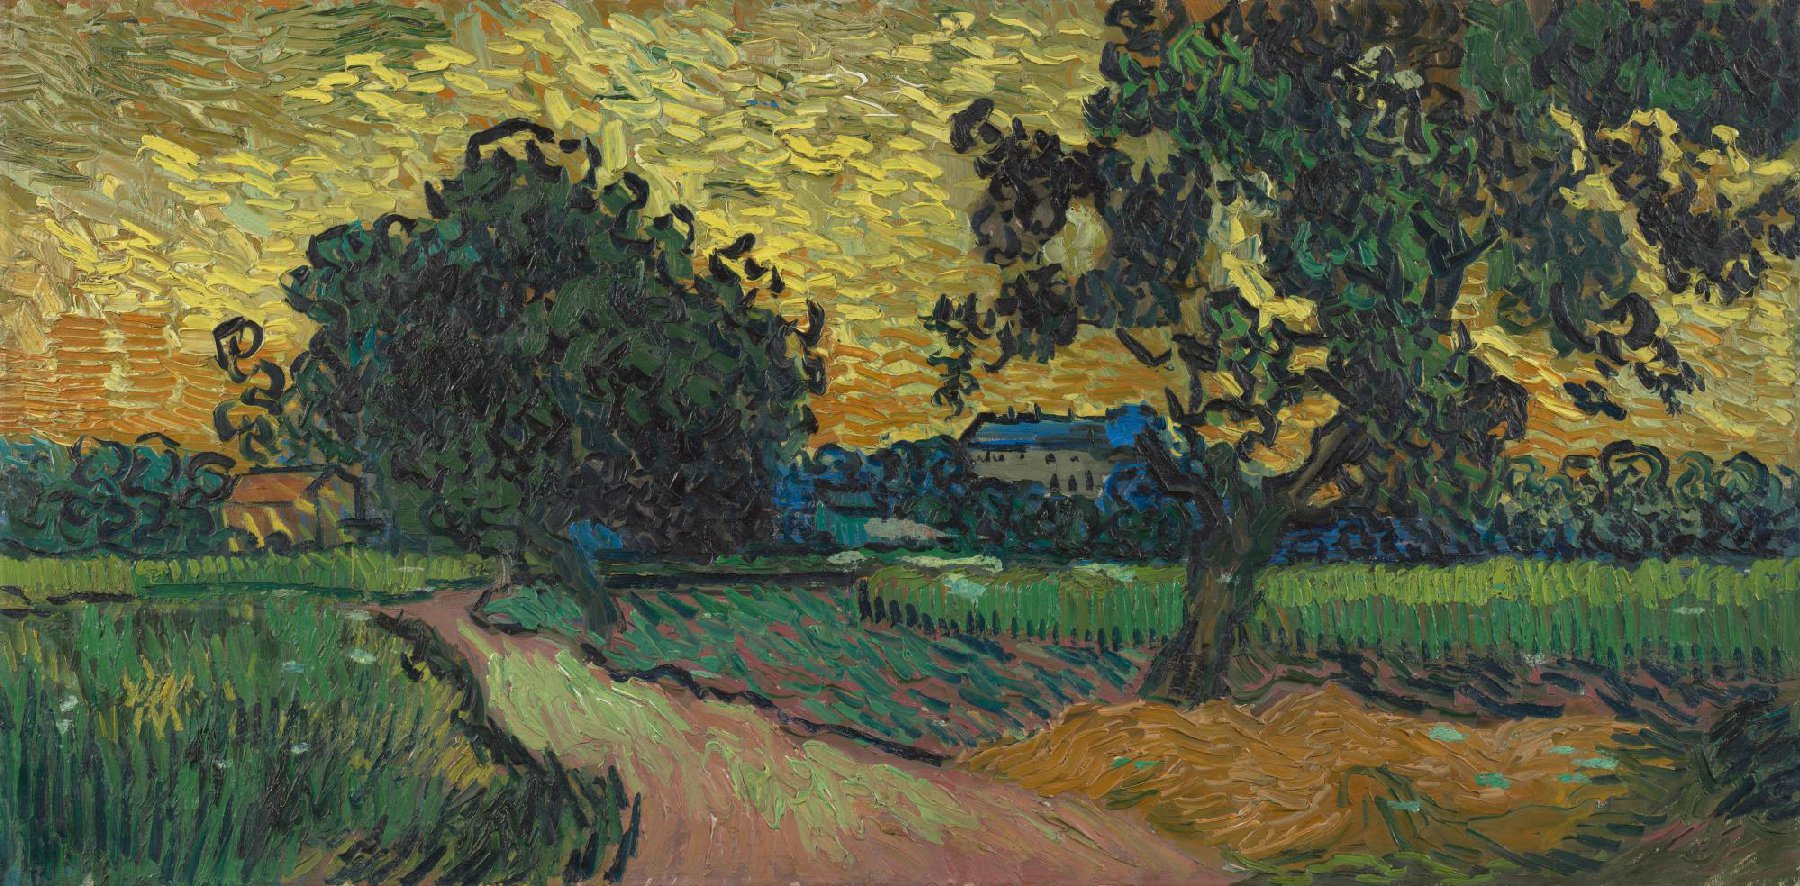 Landschap bij avondschemering Vincent van Gogh (1853 - 1890), Auvers-sur-Oise, juni 1890